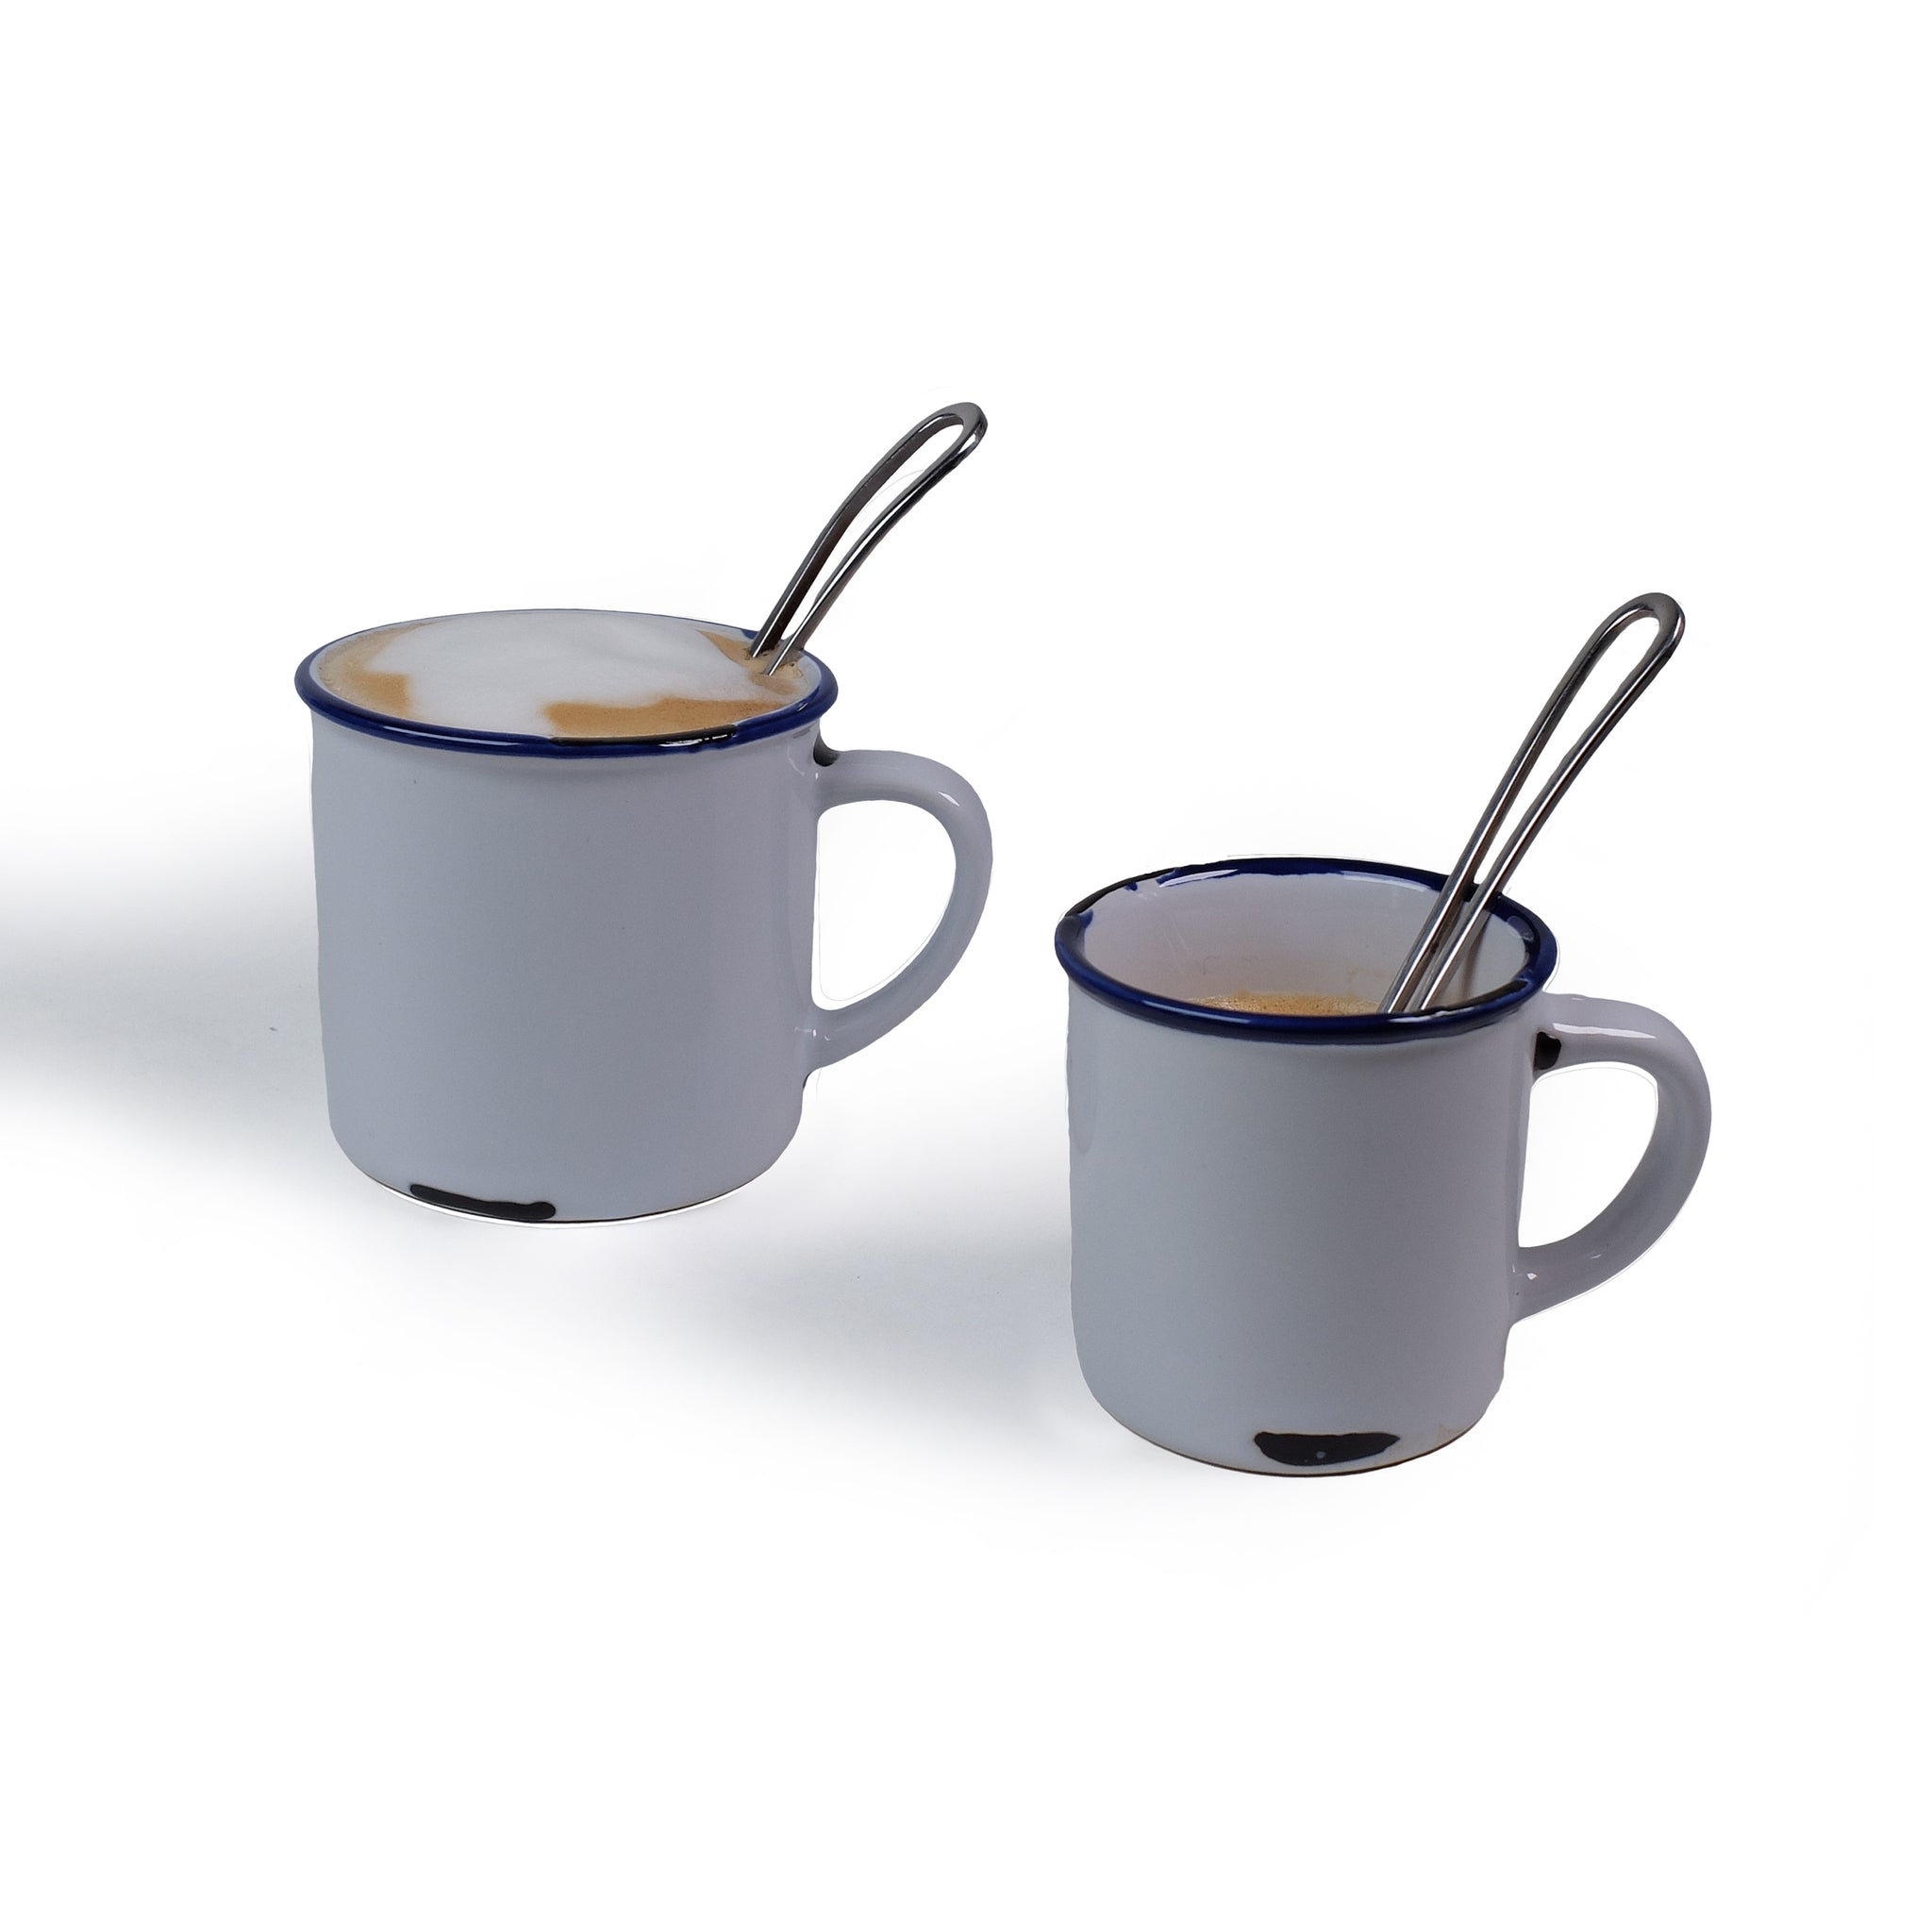 Jailhouse Cups Cappuccino Set/4│Rob Brandt│Goods│art. DB 12.01│groot en klein met koffie